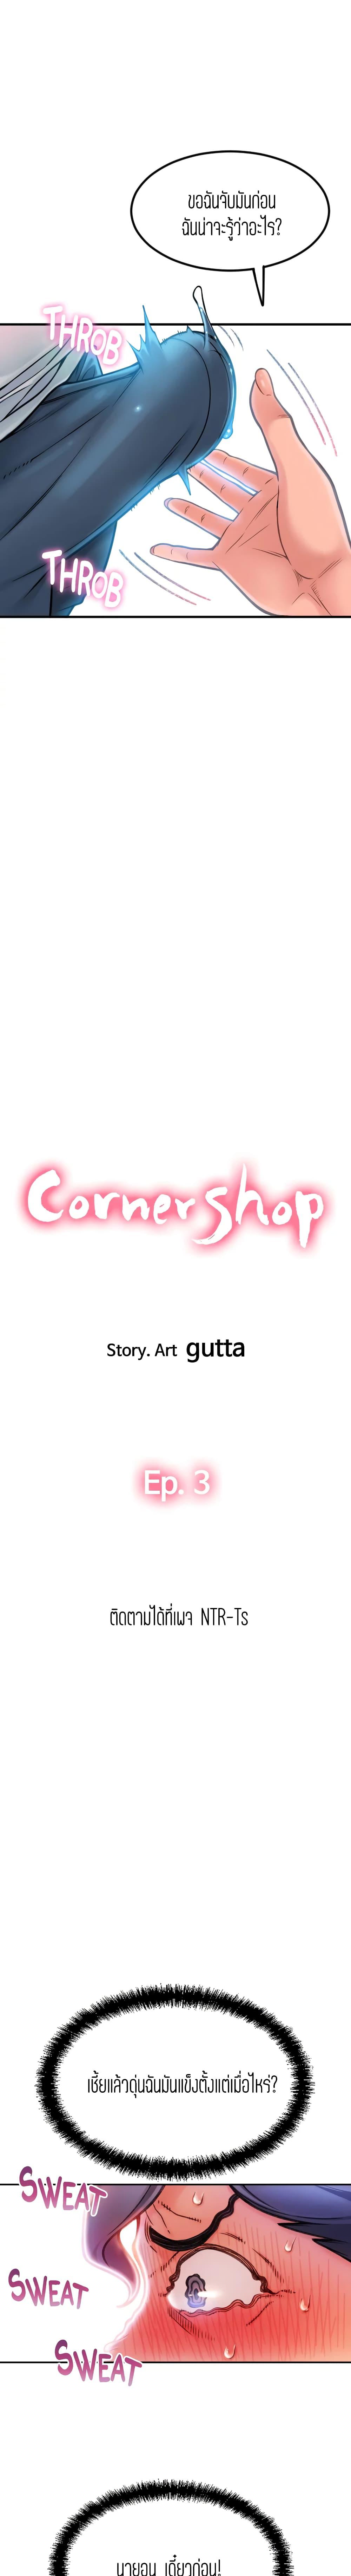 Corner Shop 3 ภาพ 2